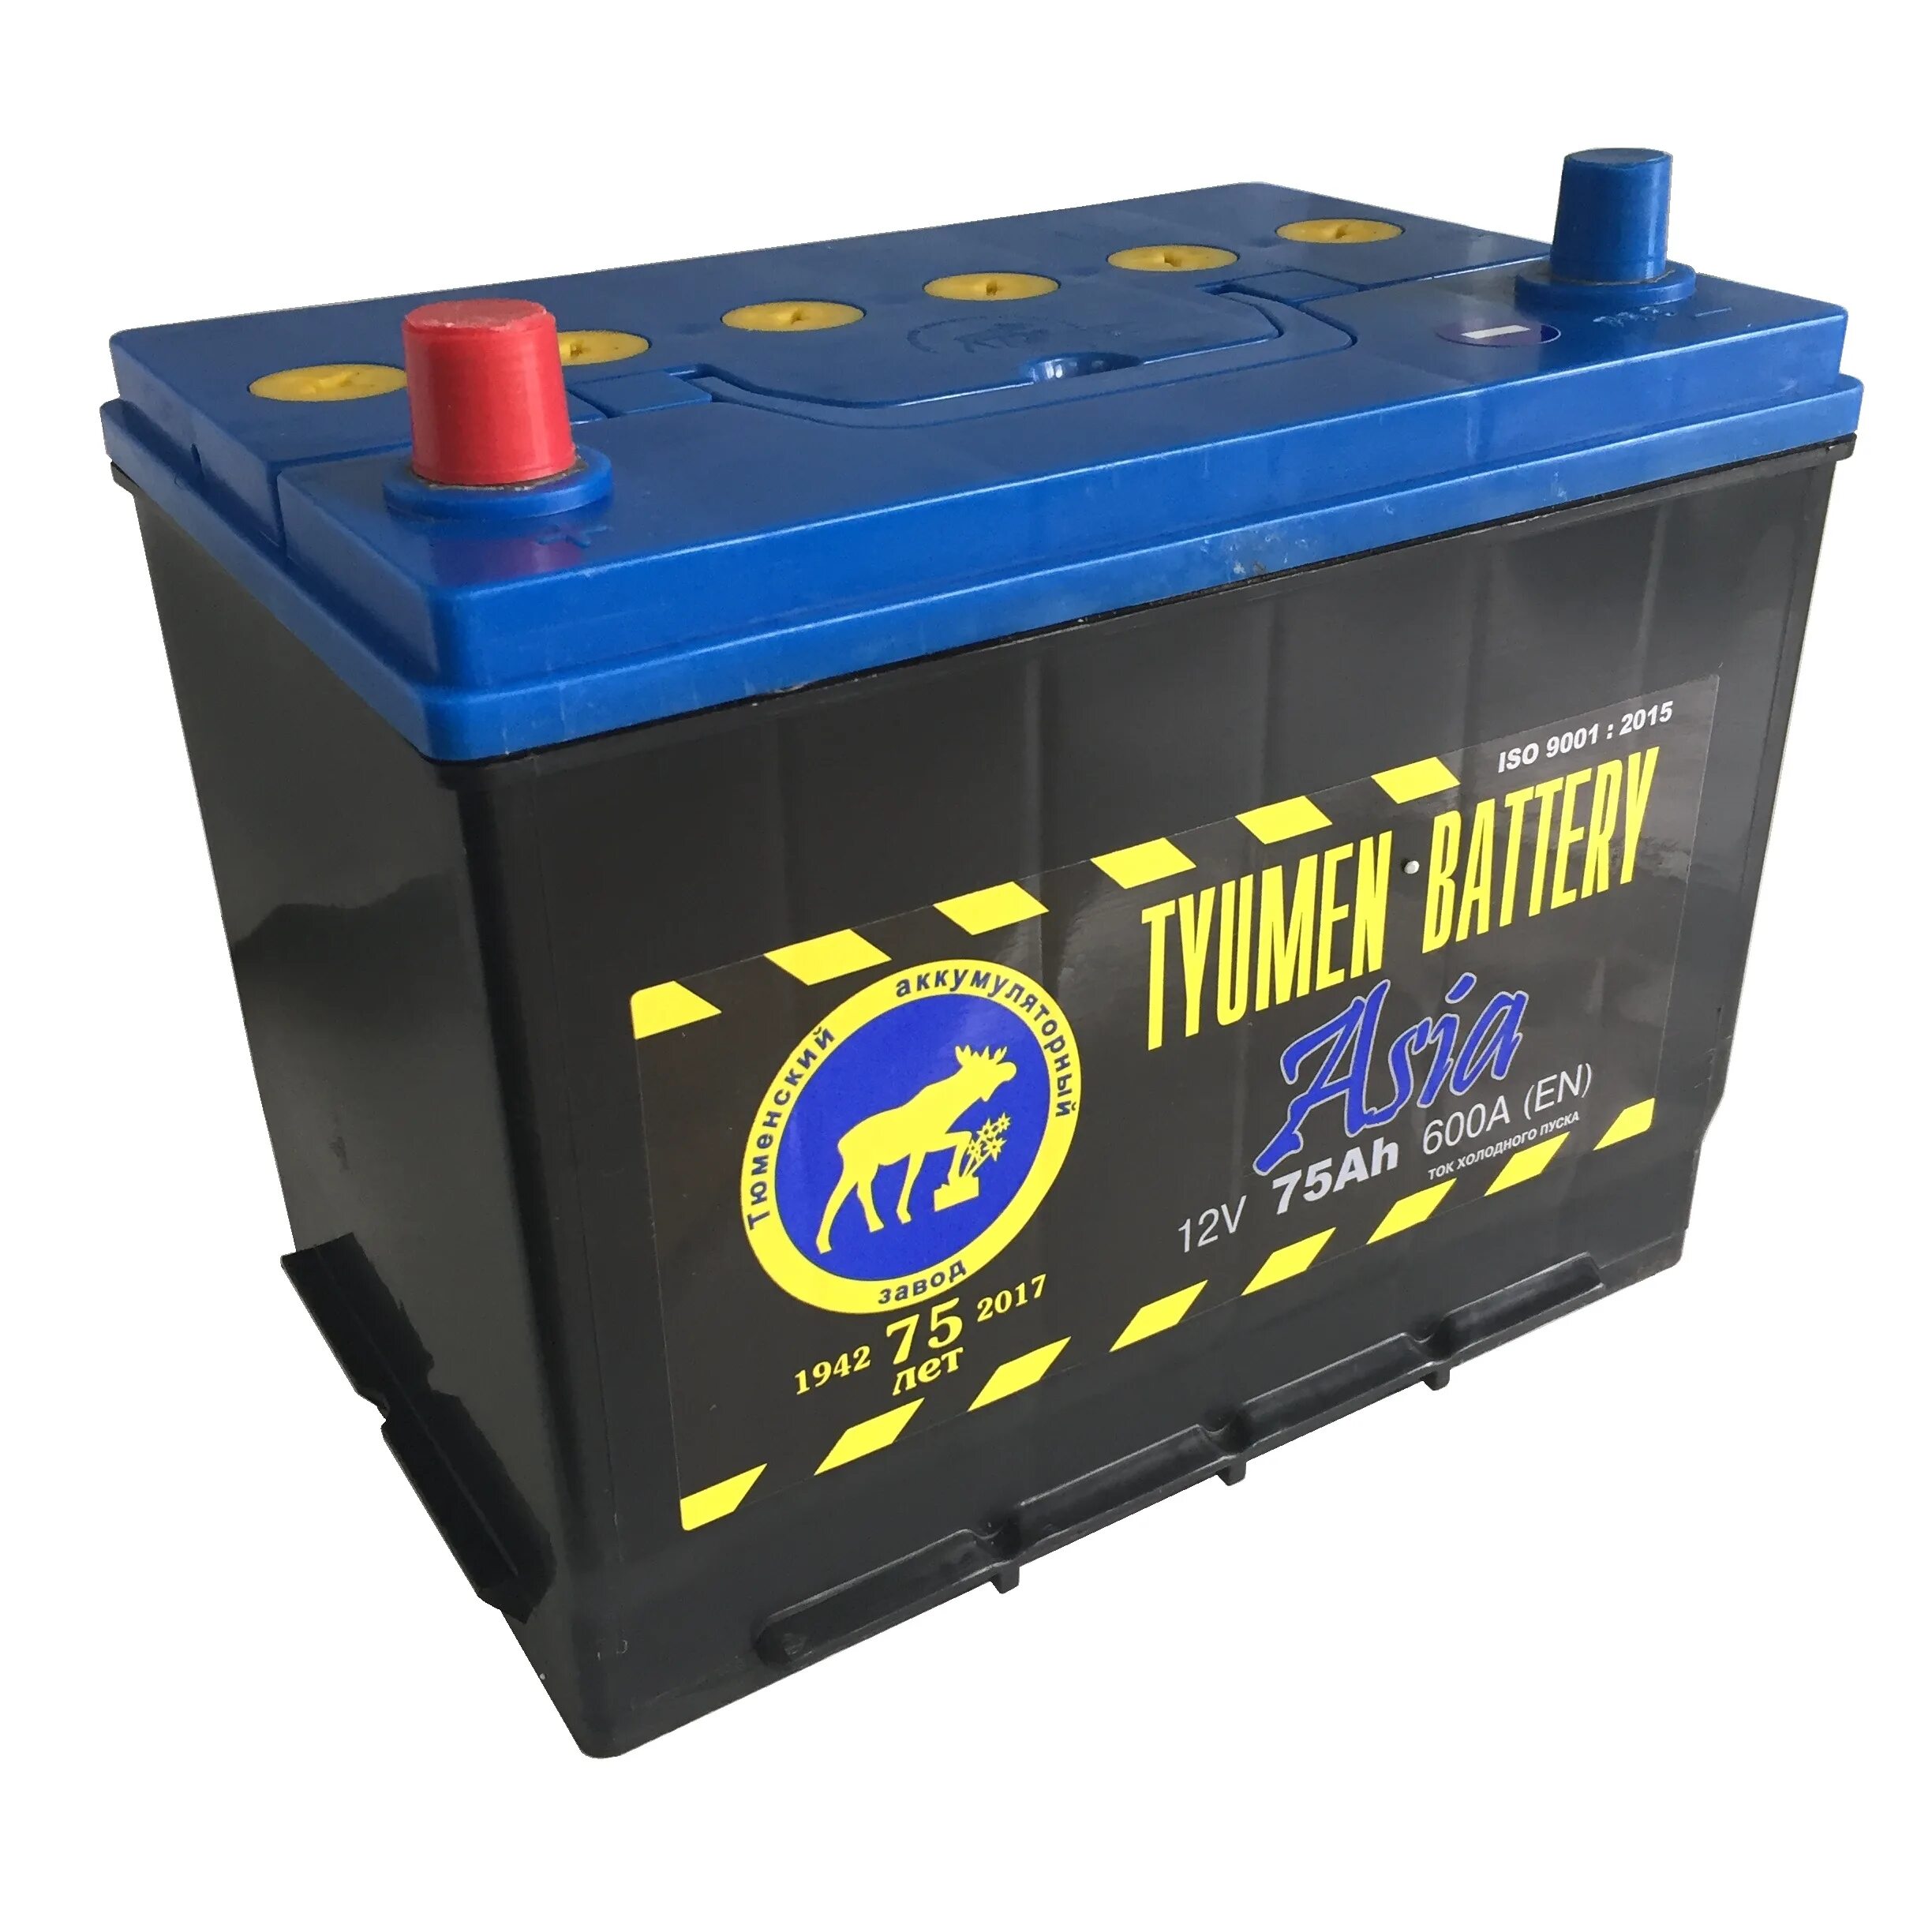 Аккумуляторы Tyumen Battery 75. Аккумулятор Tyumen Battery Asia. Батарея аккумуляторная АКБ Tyumen Battery "Asia" АПЗ 6ст 75 630а. Tyumen Battery Standard 6ct-75l 660а о.п. 278х175х190. Аккумулятор asia 75